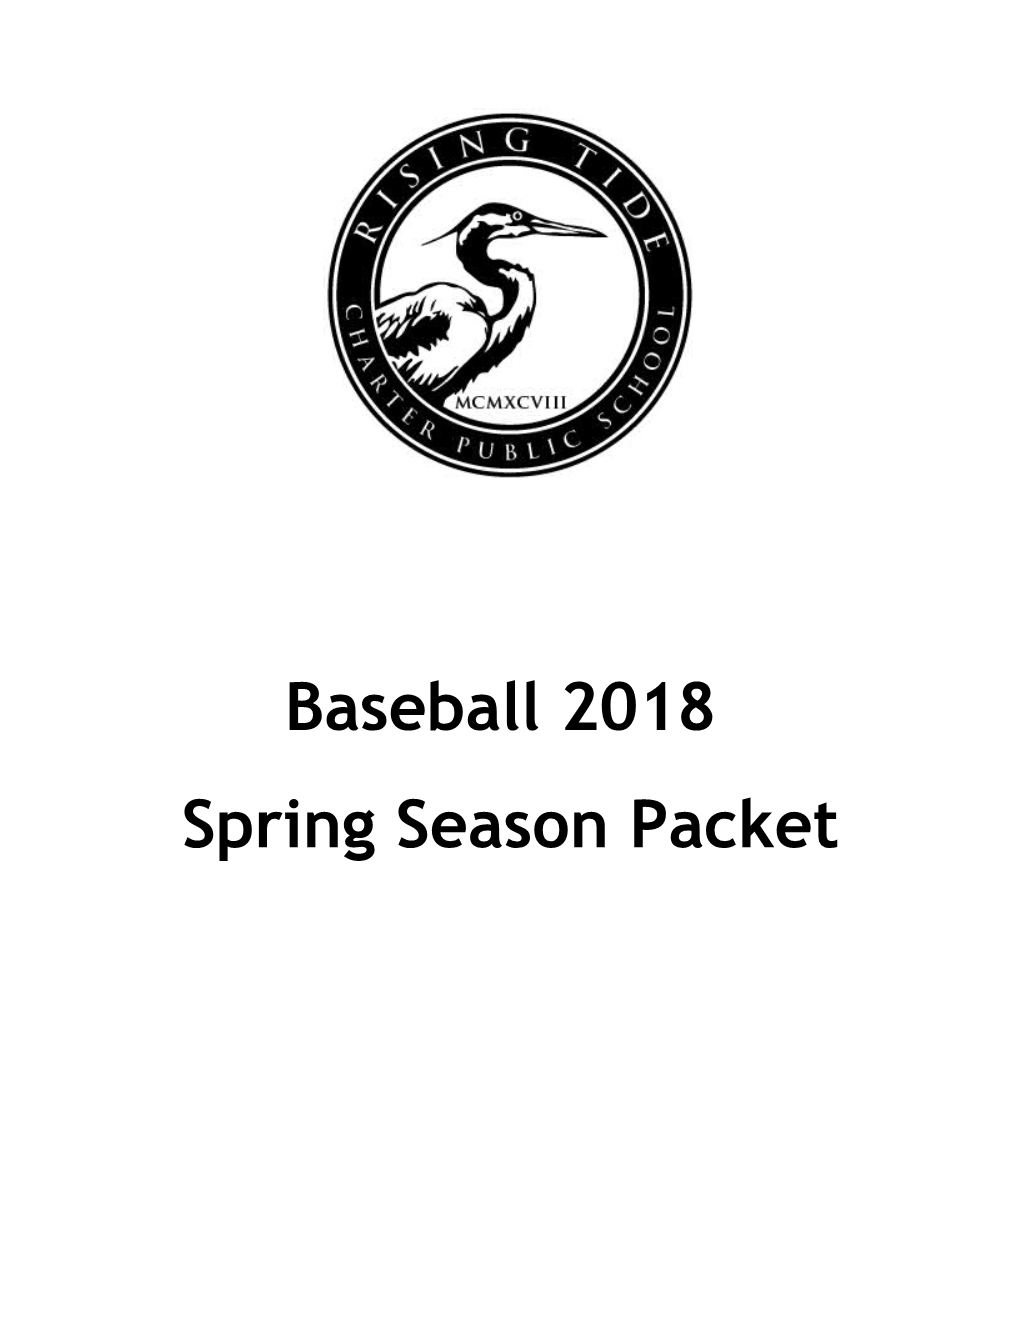 Spring Season Packet